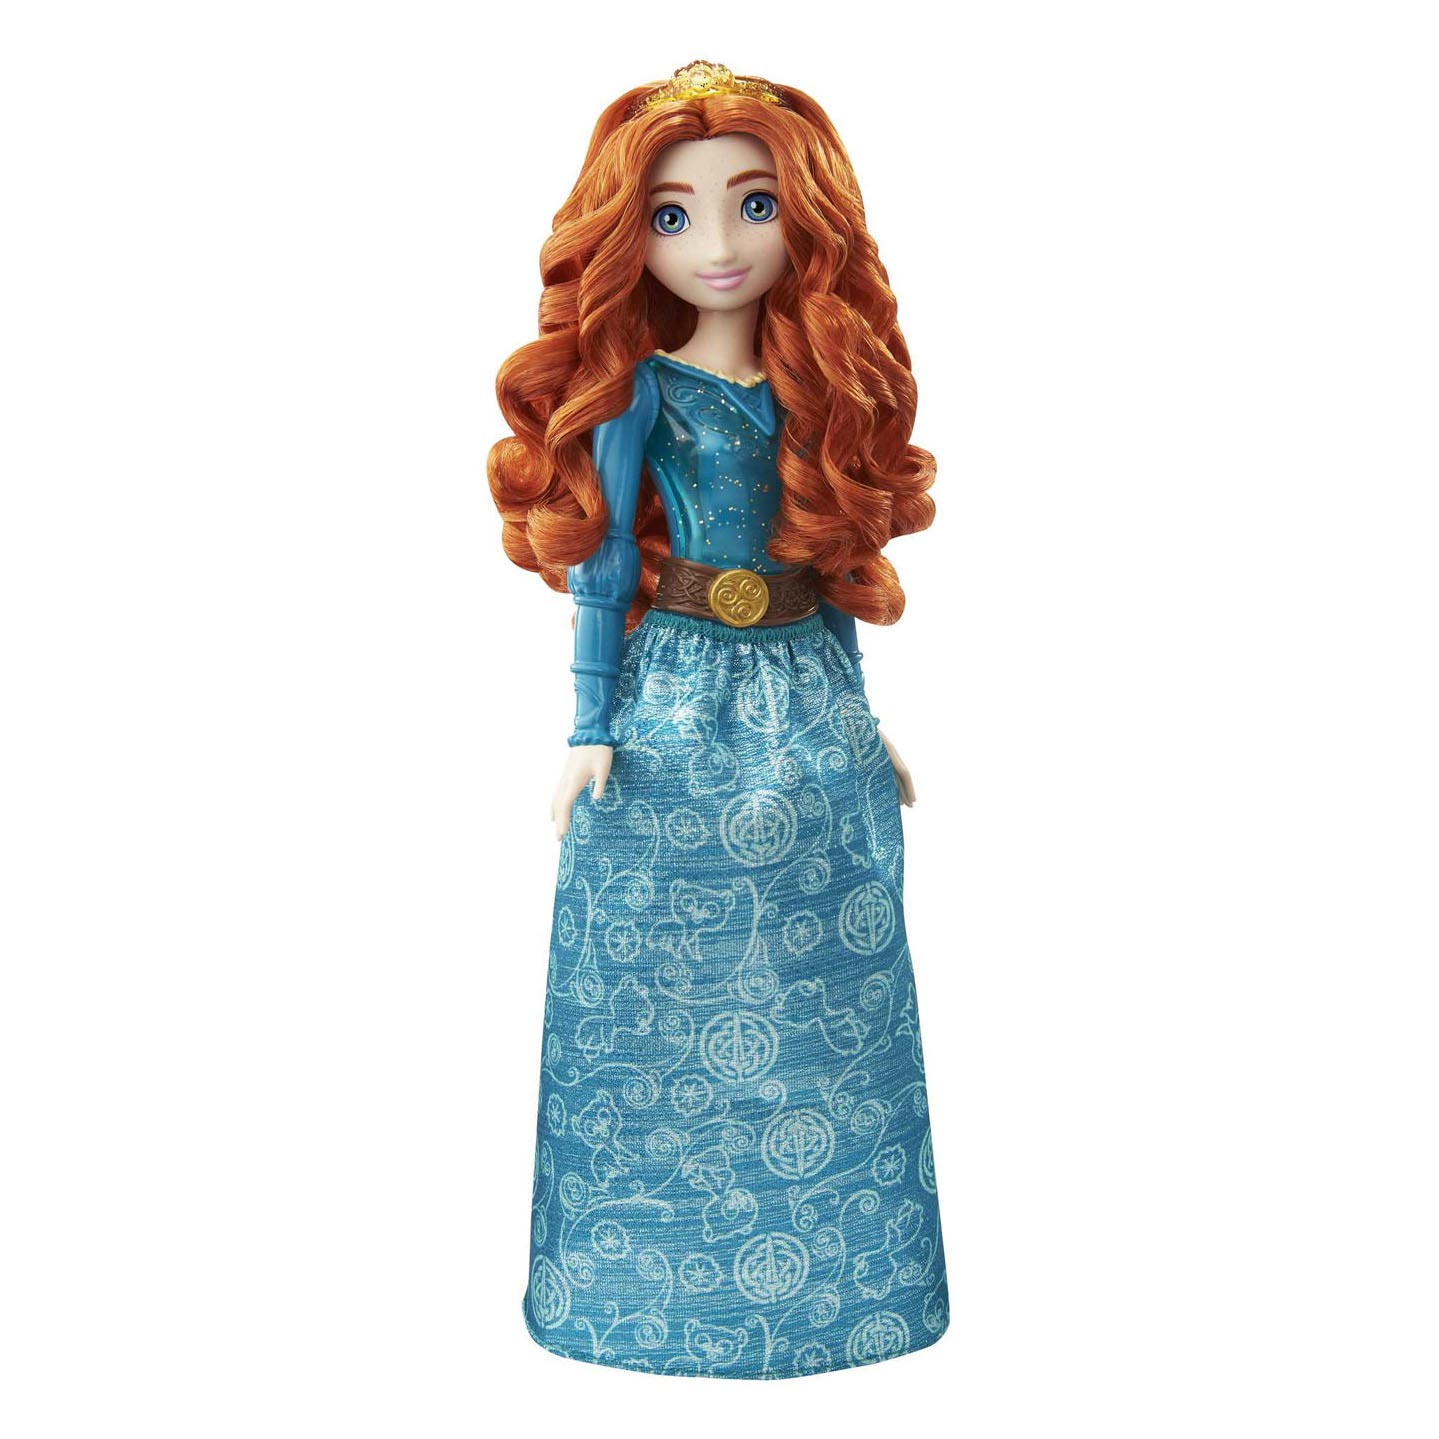 uitrusting Weven in beroep gaan Disney Princess Doll - Merida | Thimble Toys